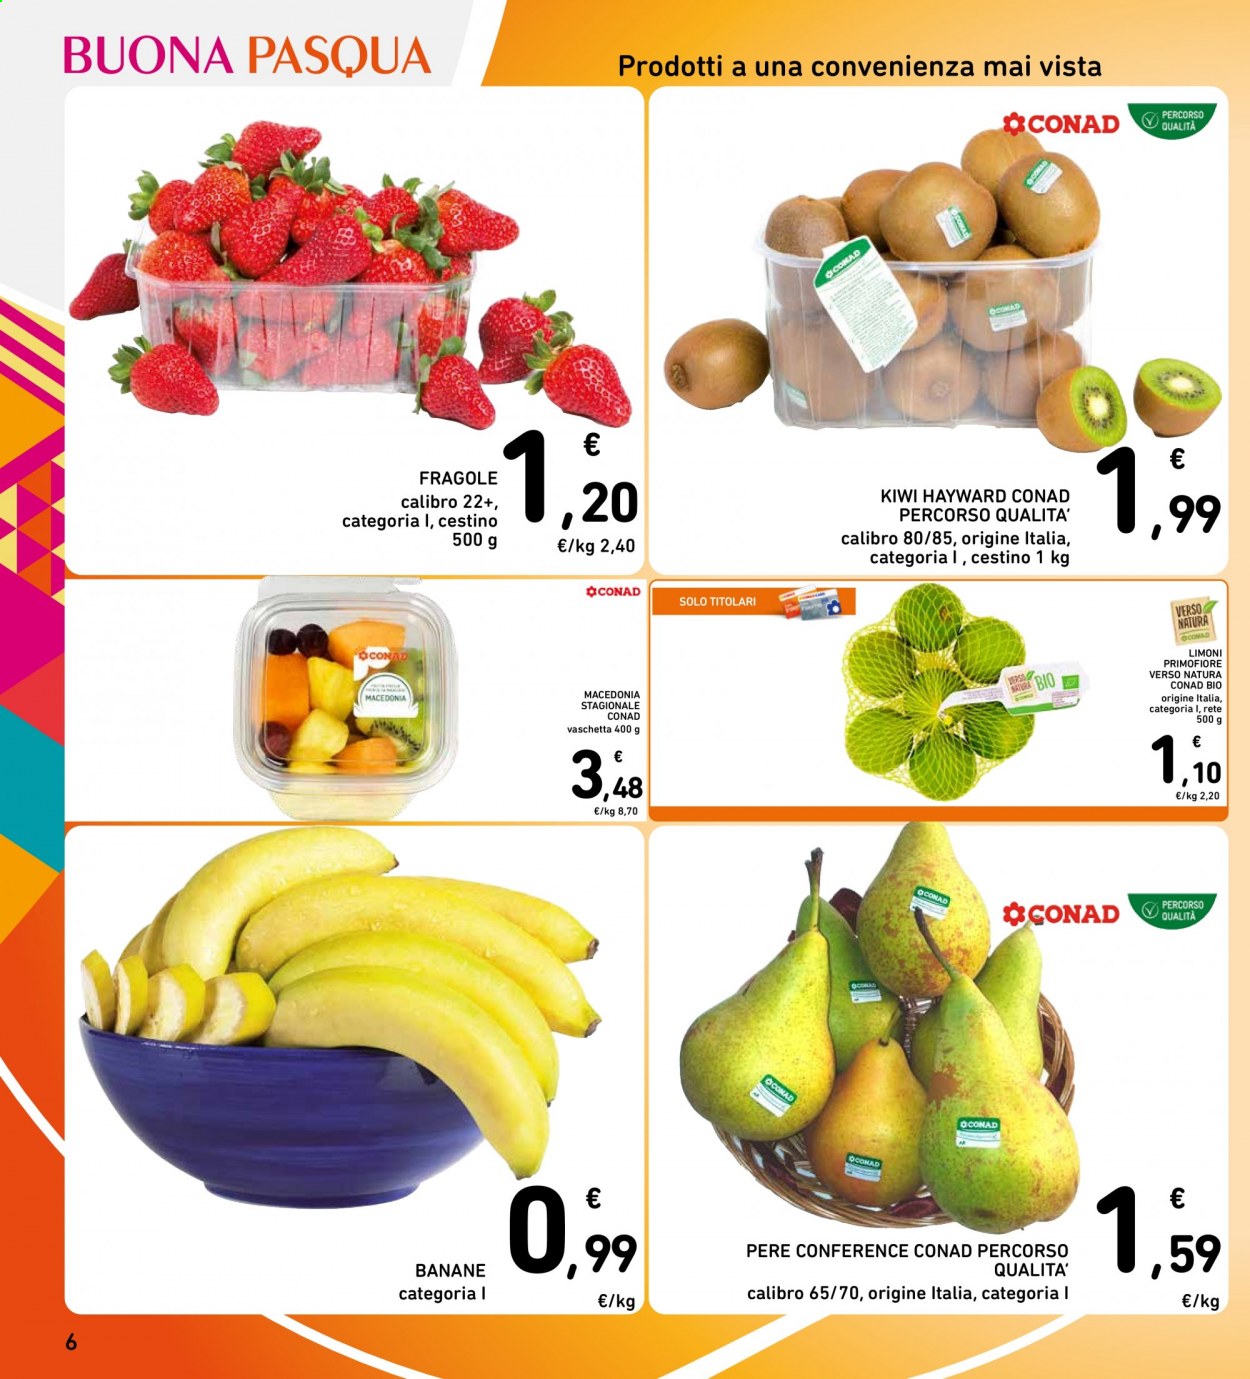 thumbnail - Volantino Conad - 29/3/2021 - 3/4/2021 - Prodotti in offerta - banane, limoni, fragole, pere, kiwi. Pagina 6.